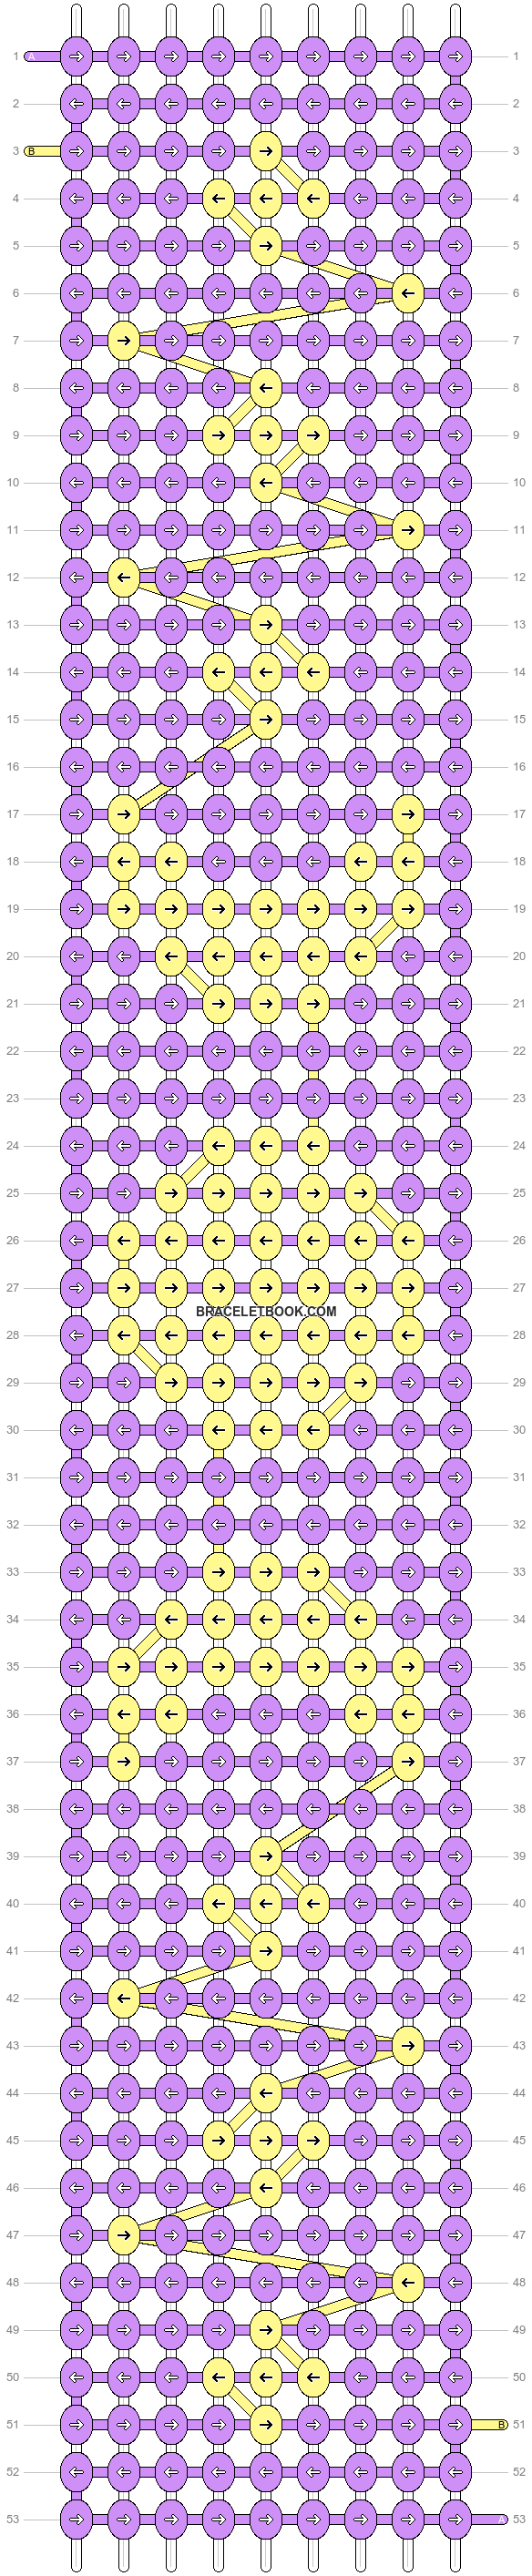 Alpha pattern #60782 variation #123259 pattern